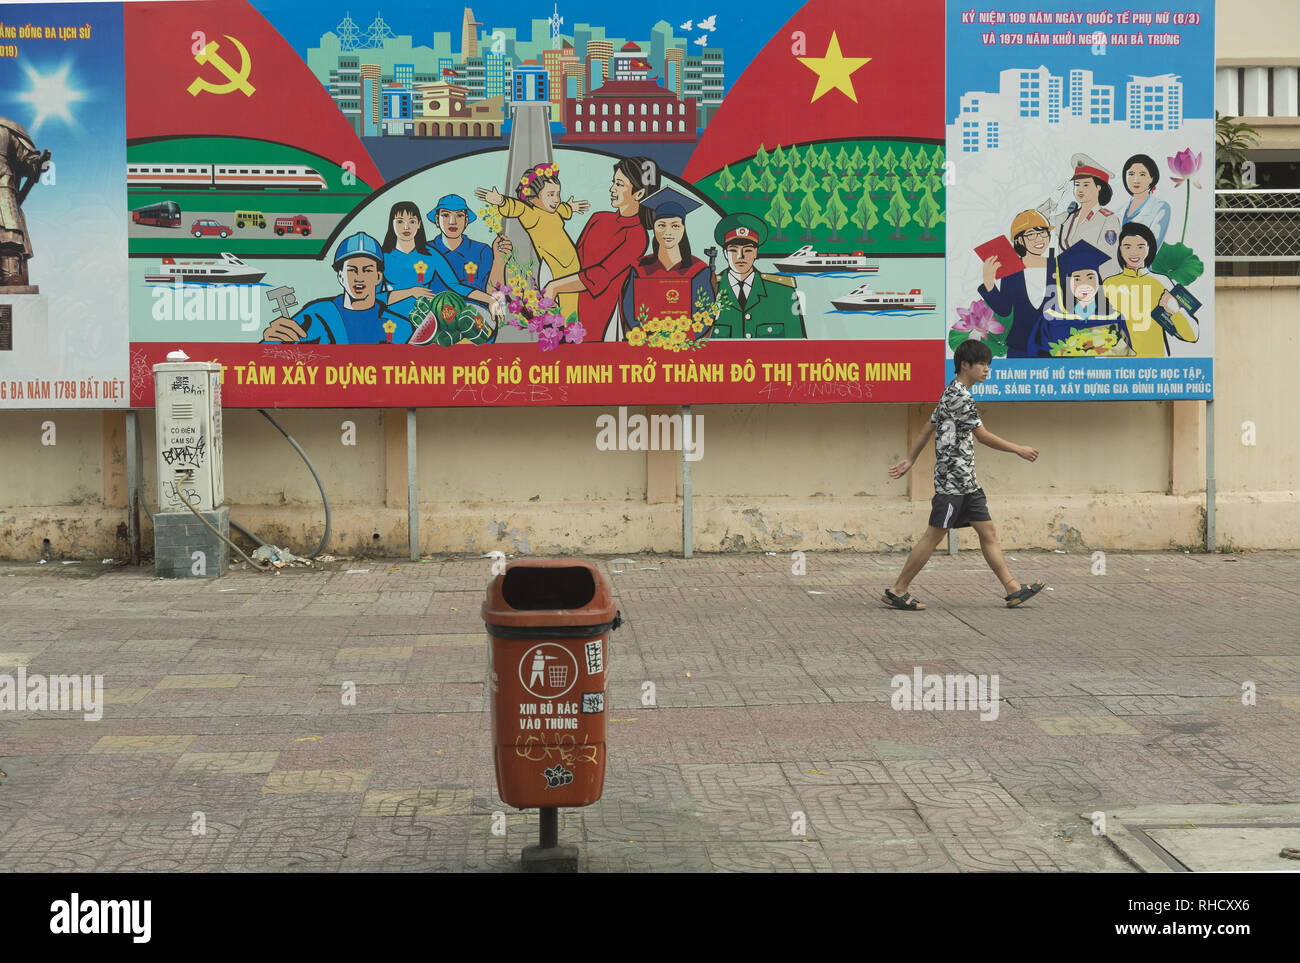 Political propaganda in Vietnam Stock Photo